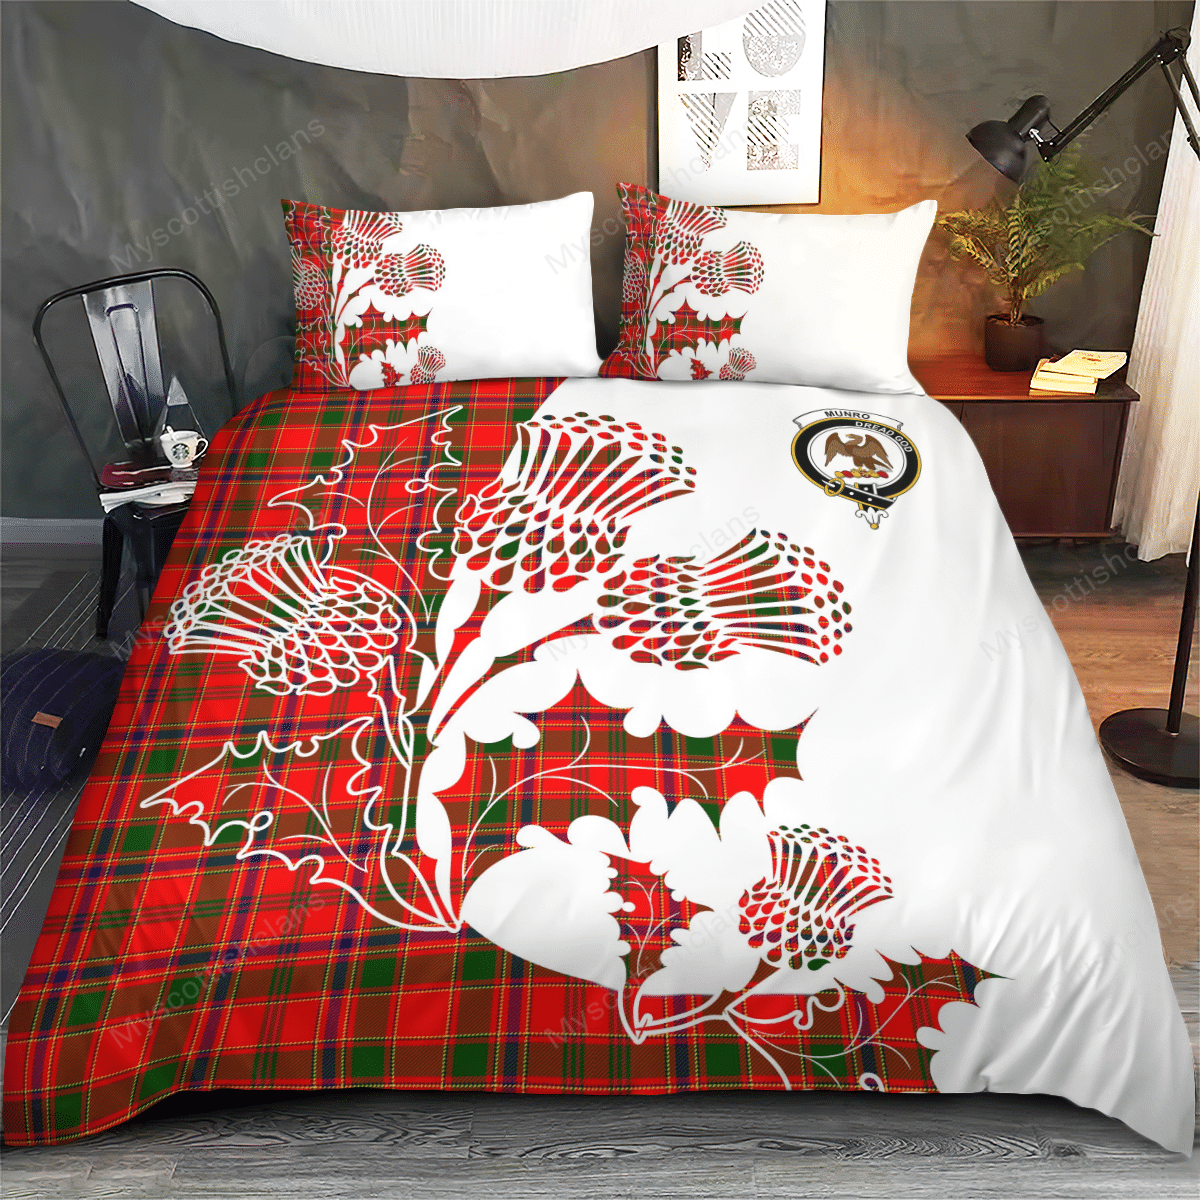 Munro Tartan Crest Bedding Set - Thistle Style